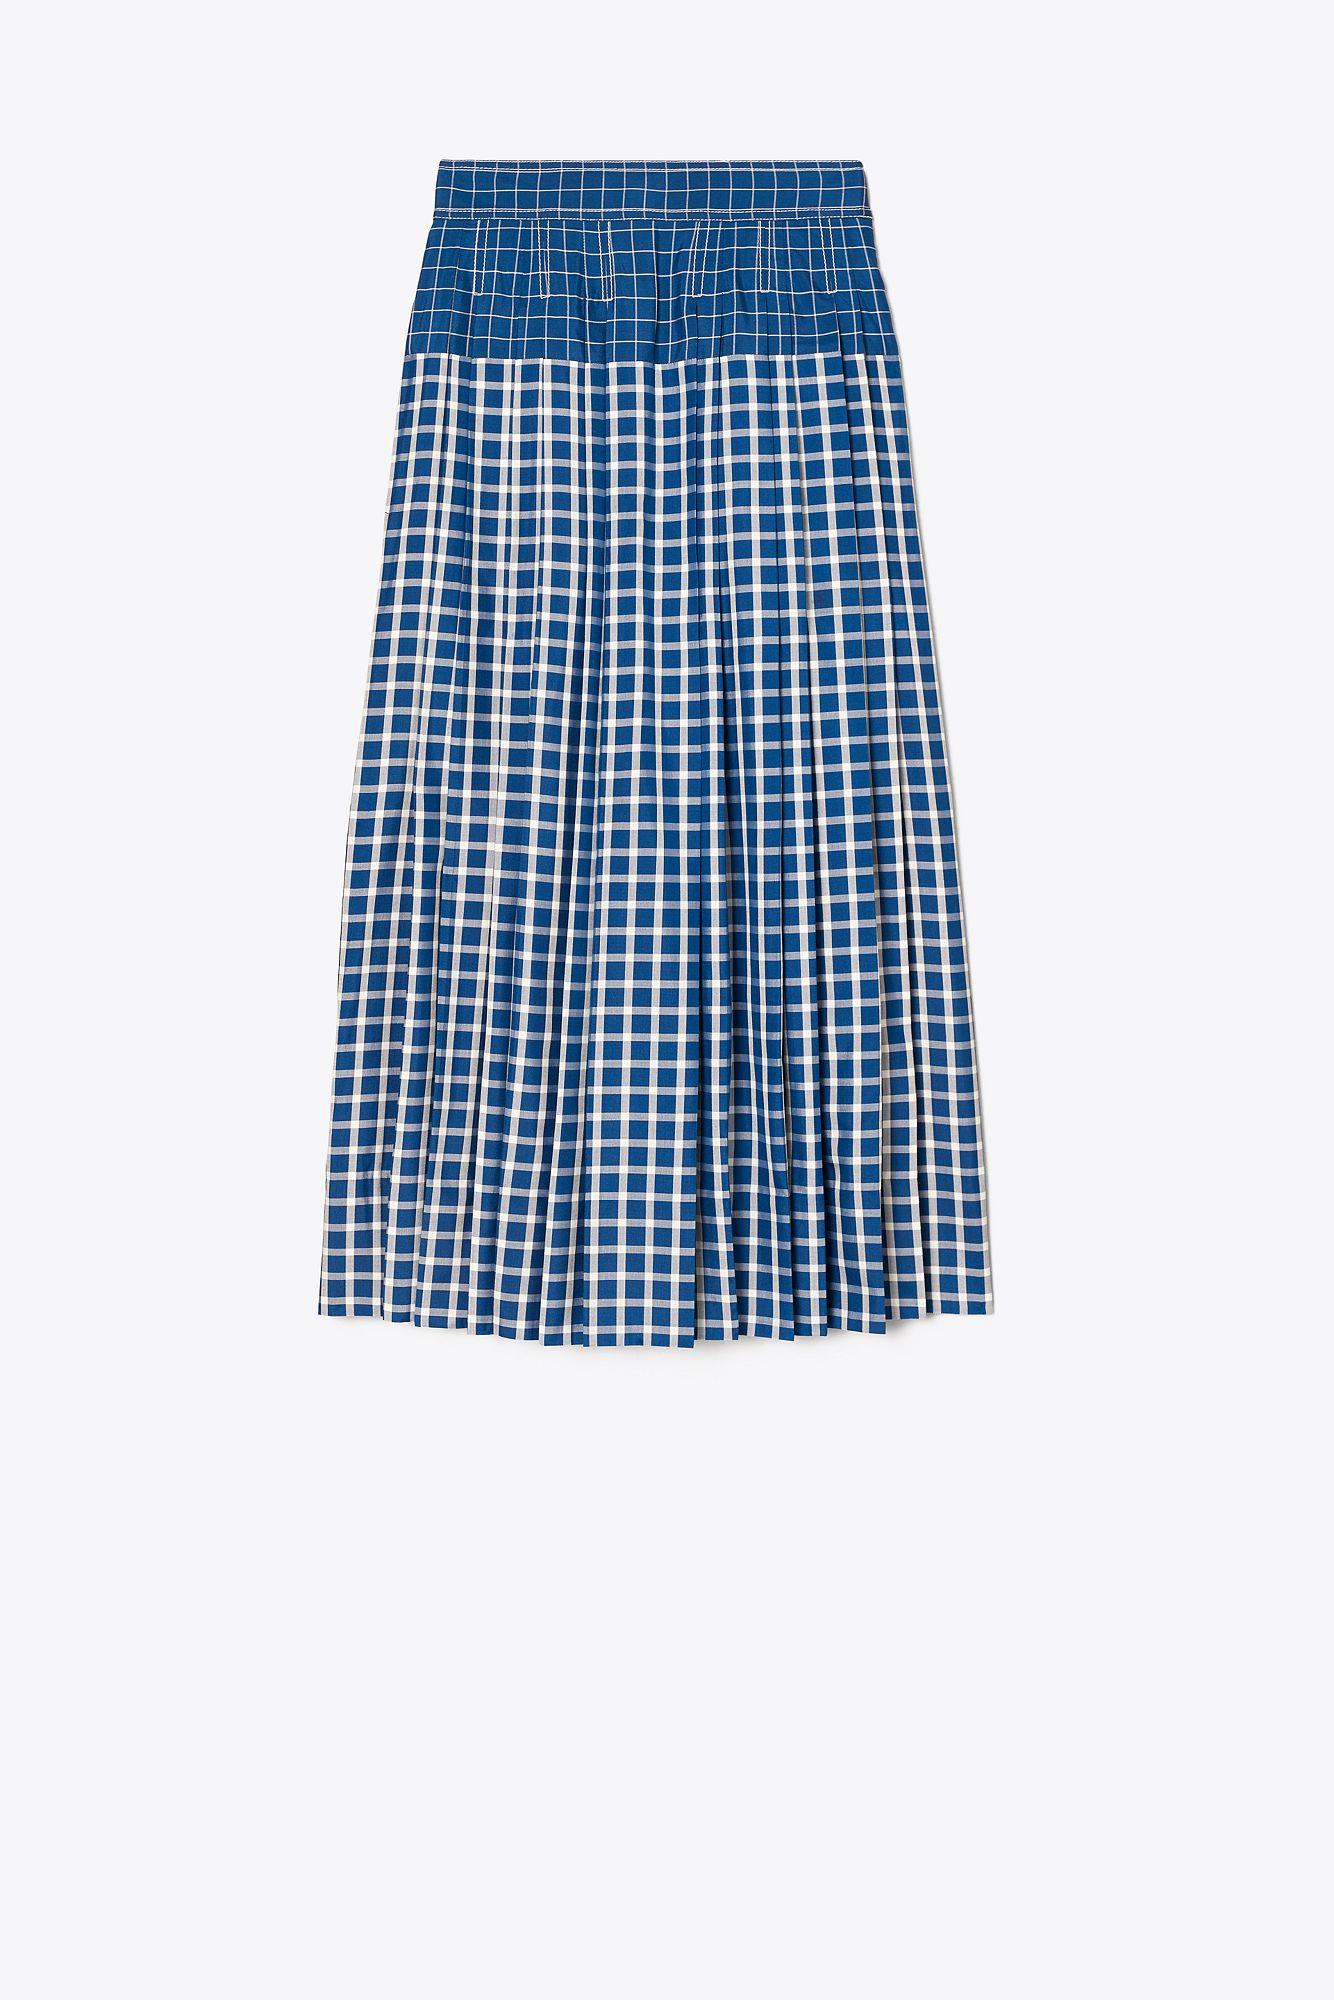 Tory Burch Picnic Plaid Silk Pleated Skirt in Blue | Lyst